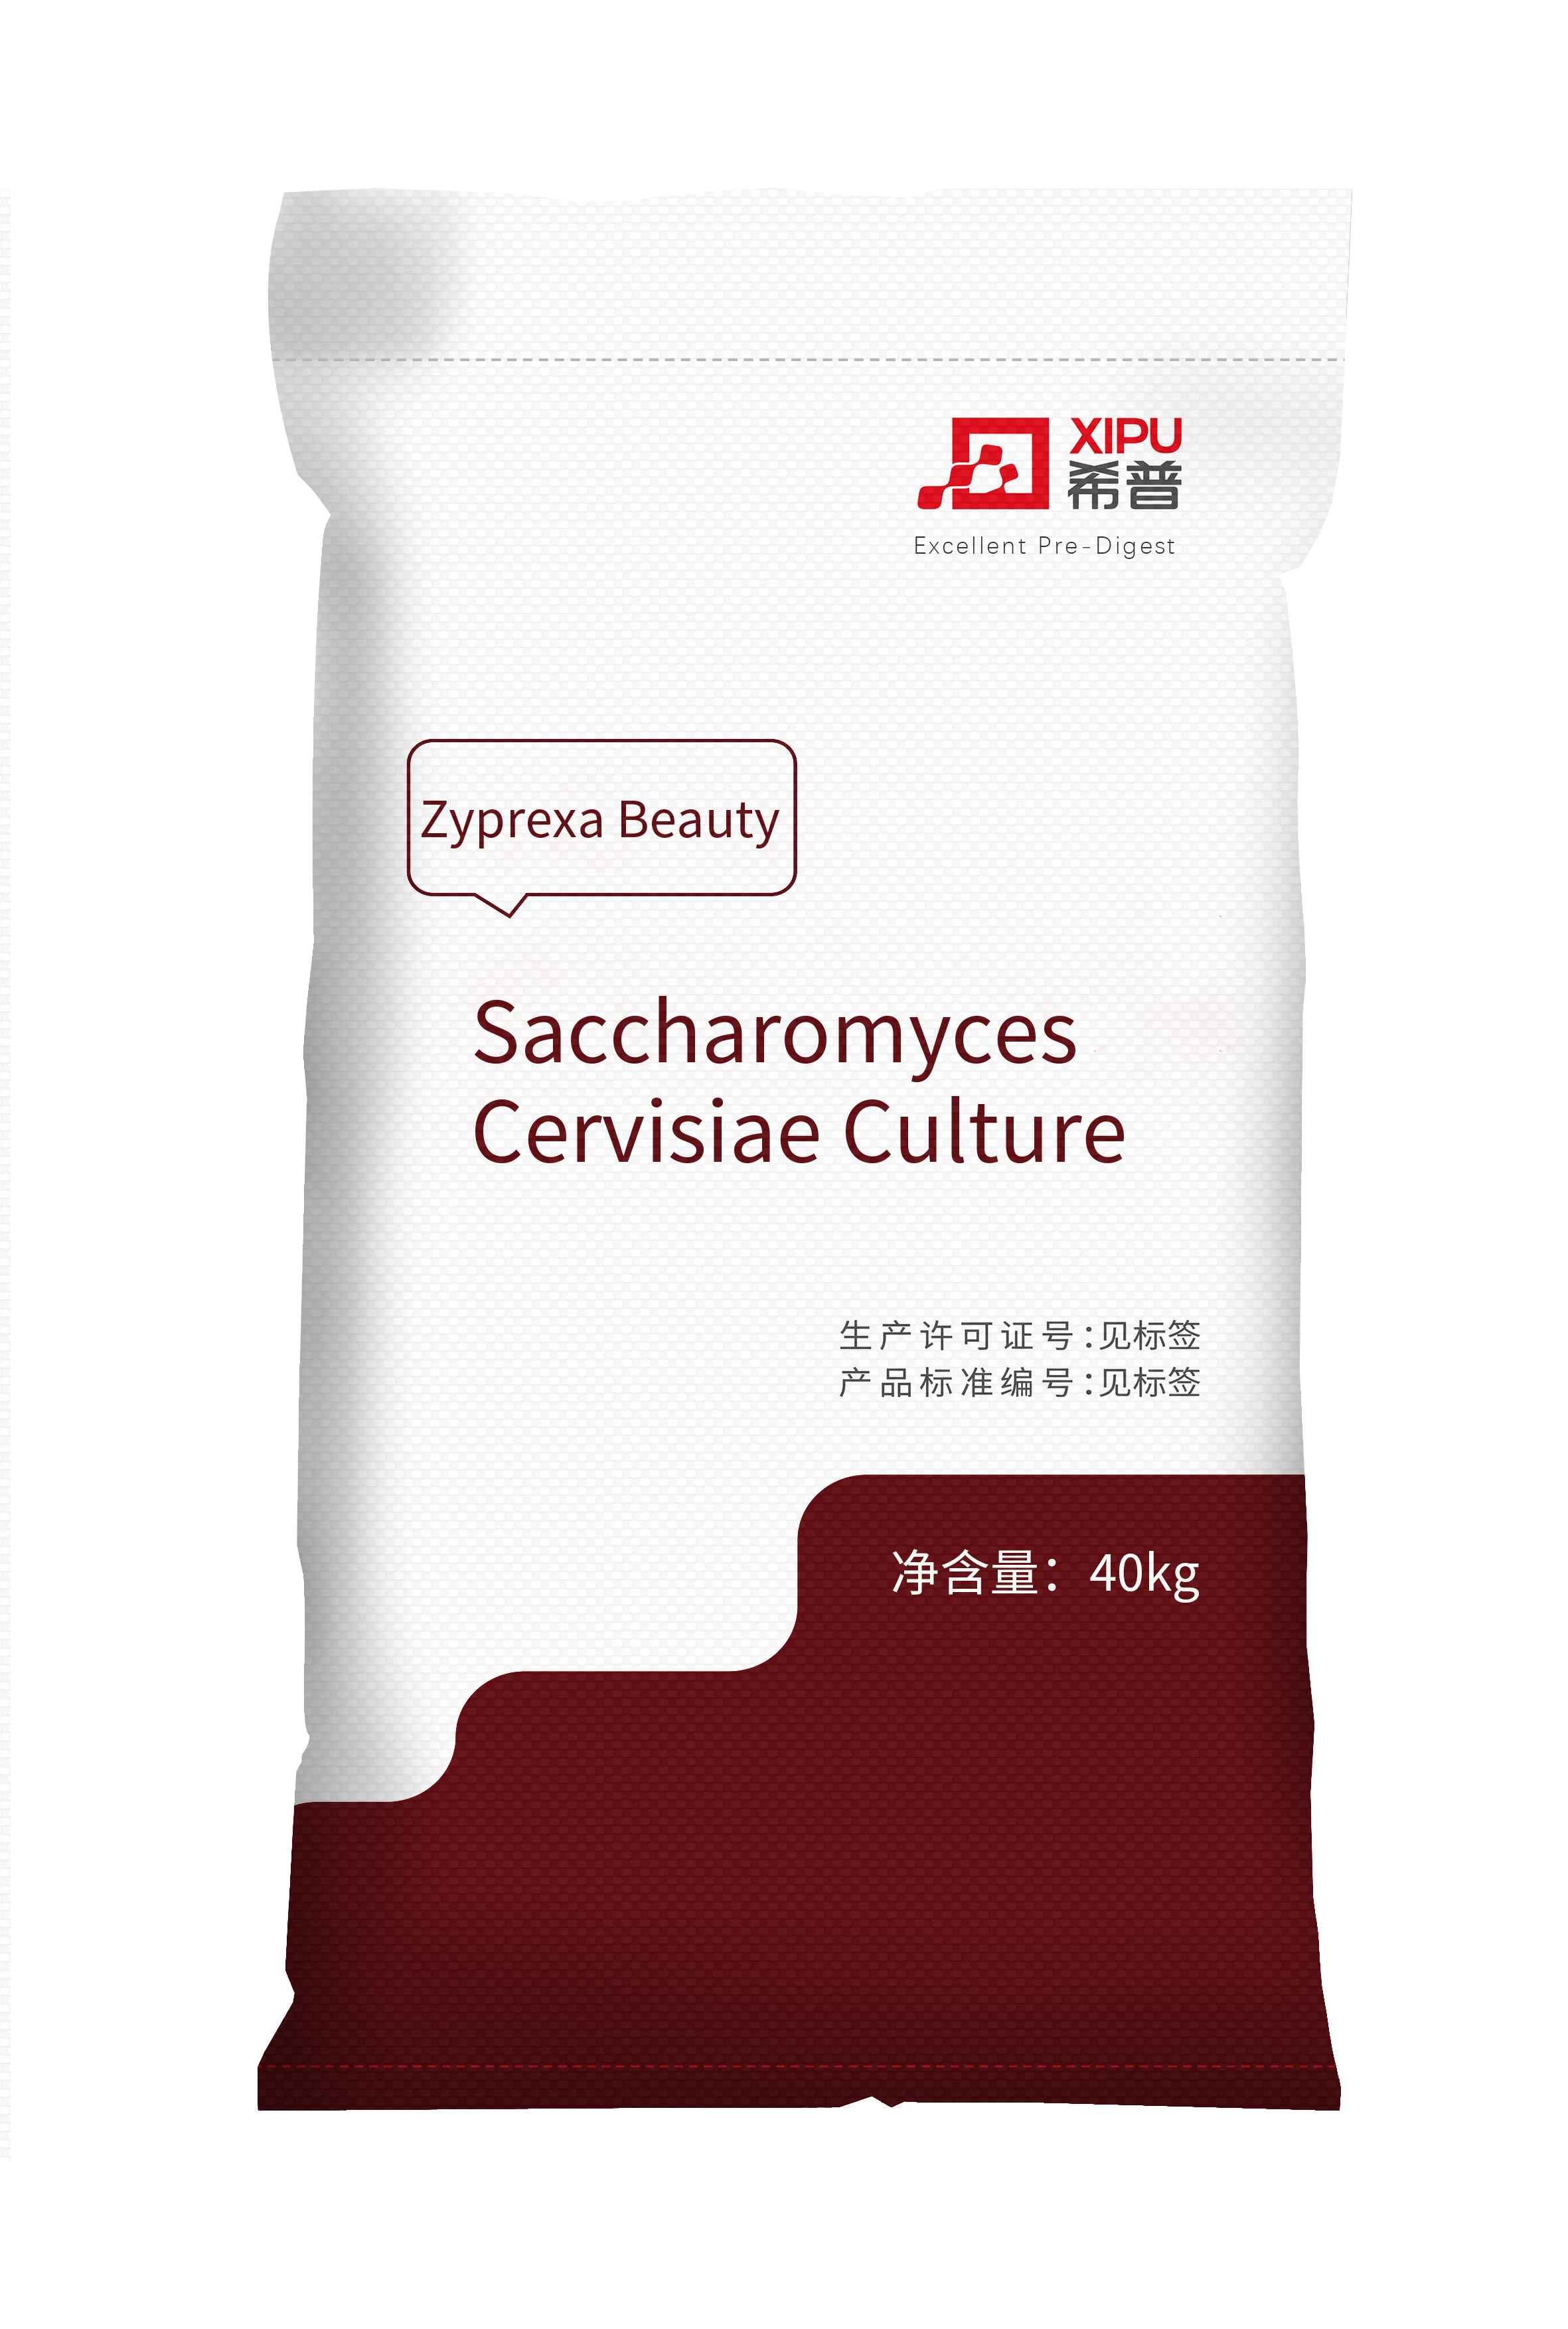 Zyprexa Beauty Saccharomyces Cerevisiae Culture